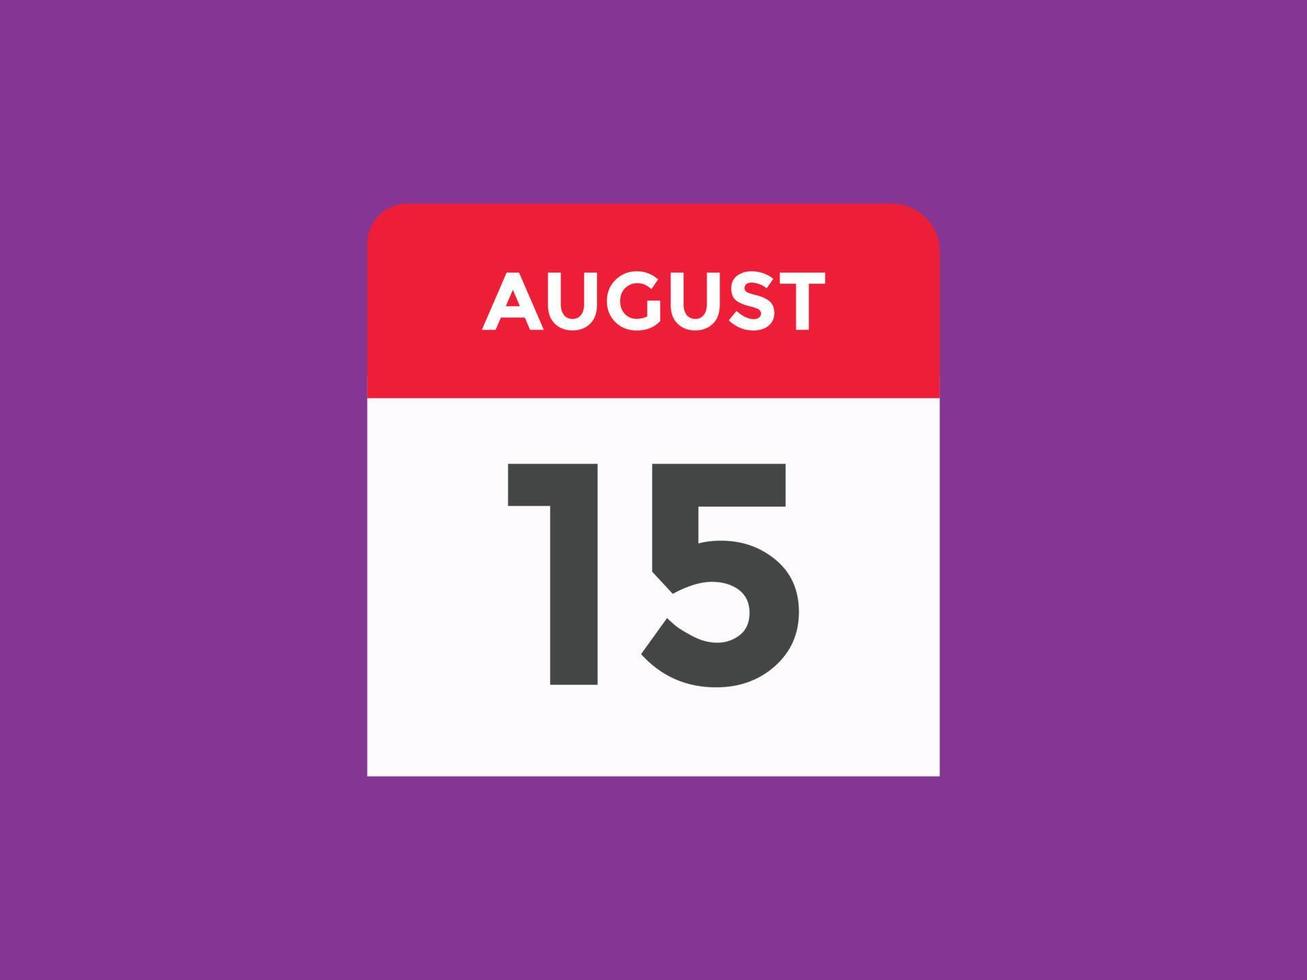 augusti 15 kalender påminnelse. 15:e augusti dagligen kalender ikon mall. kalender 15:e augusti ikon design mall. vektor illustration